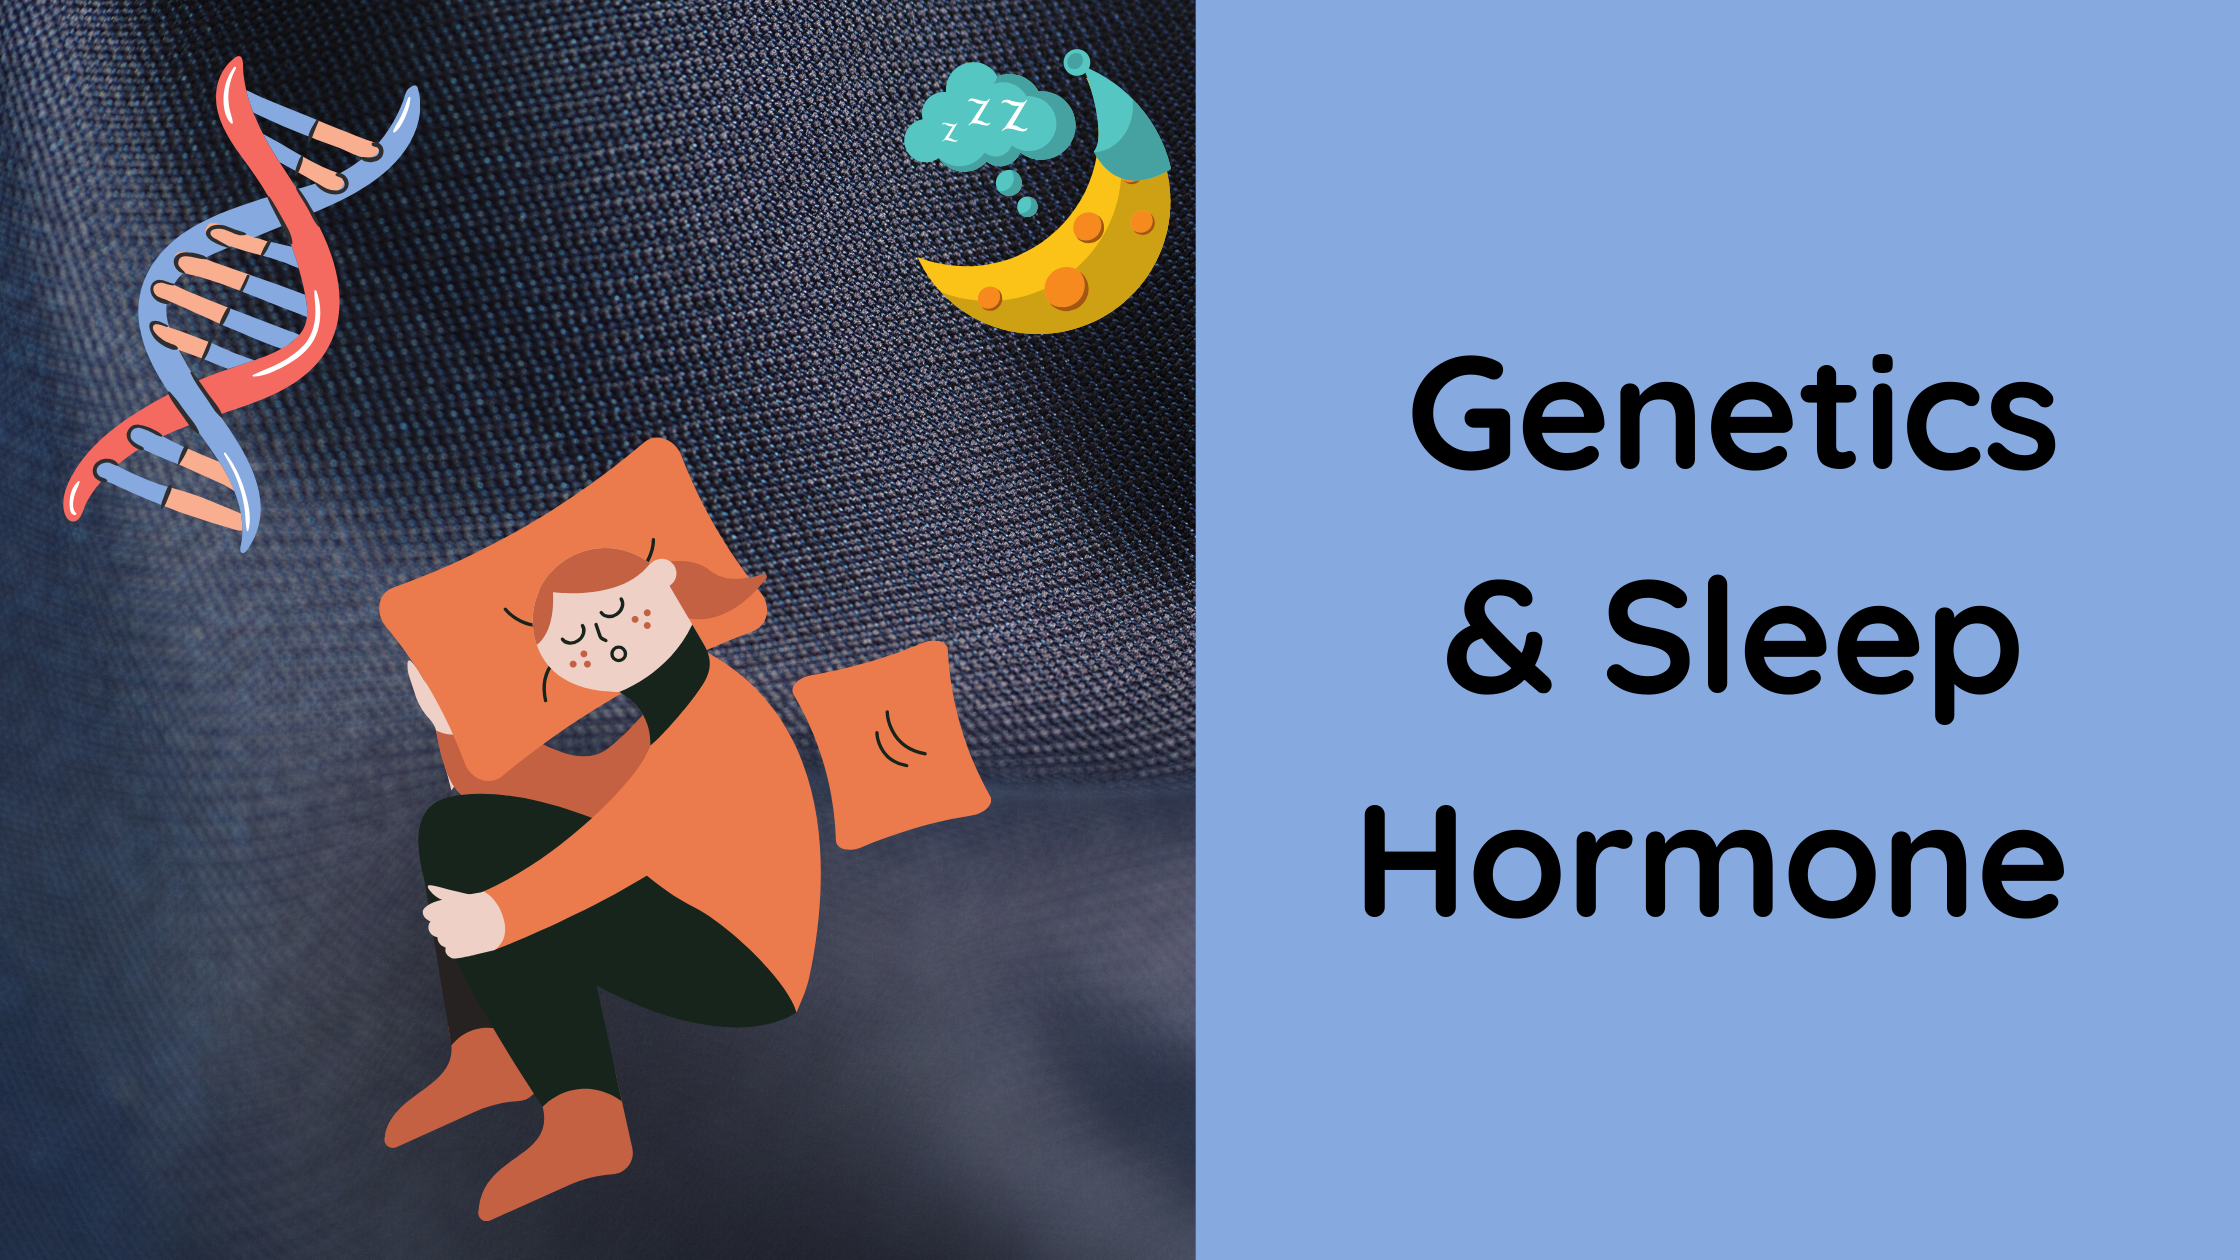 Genetics & Sleep Hormone